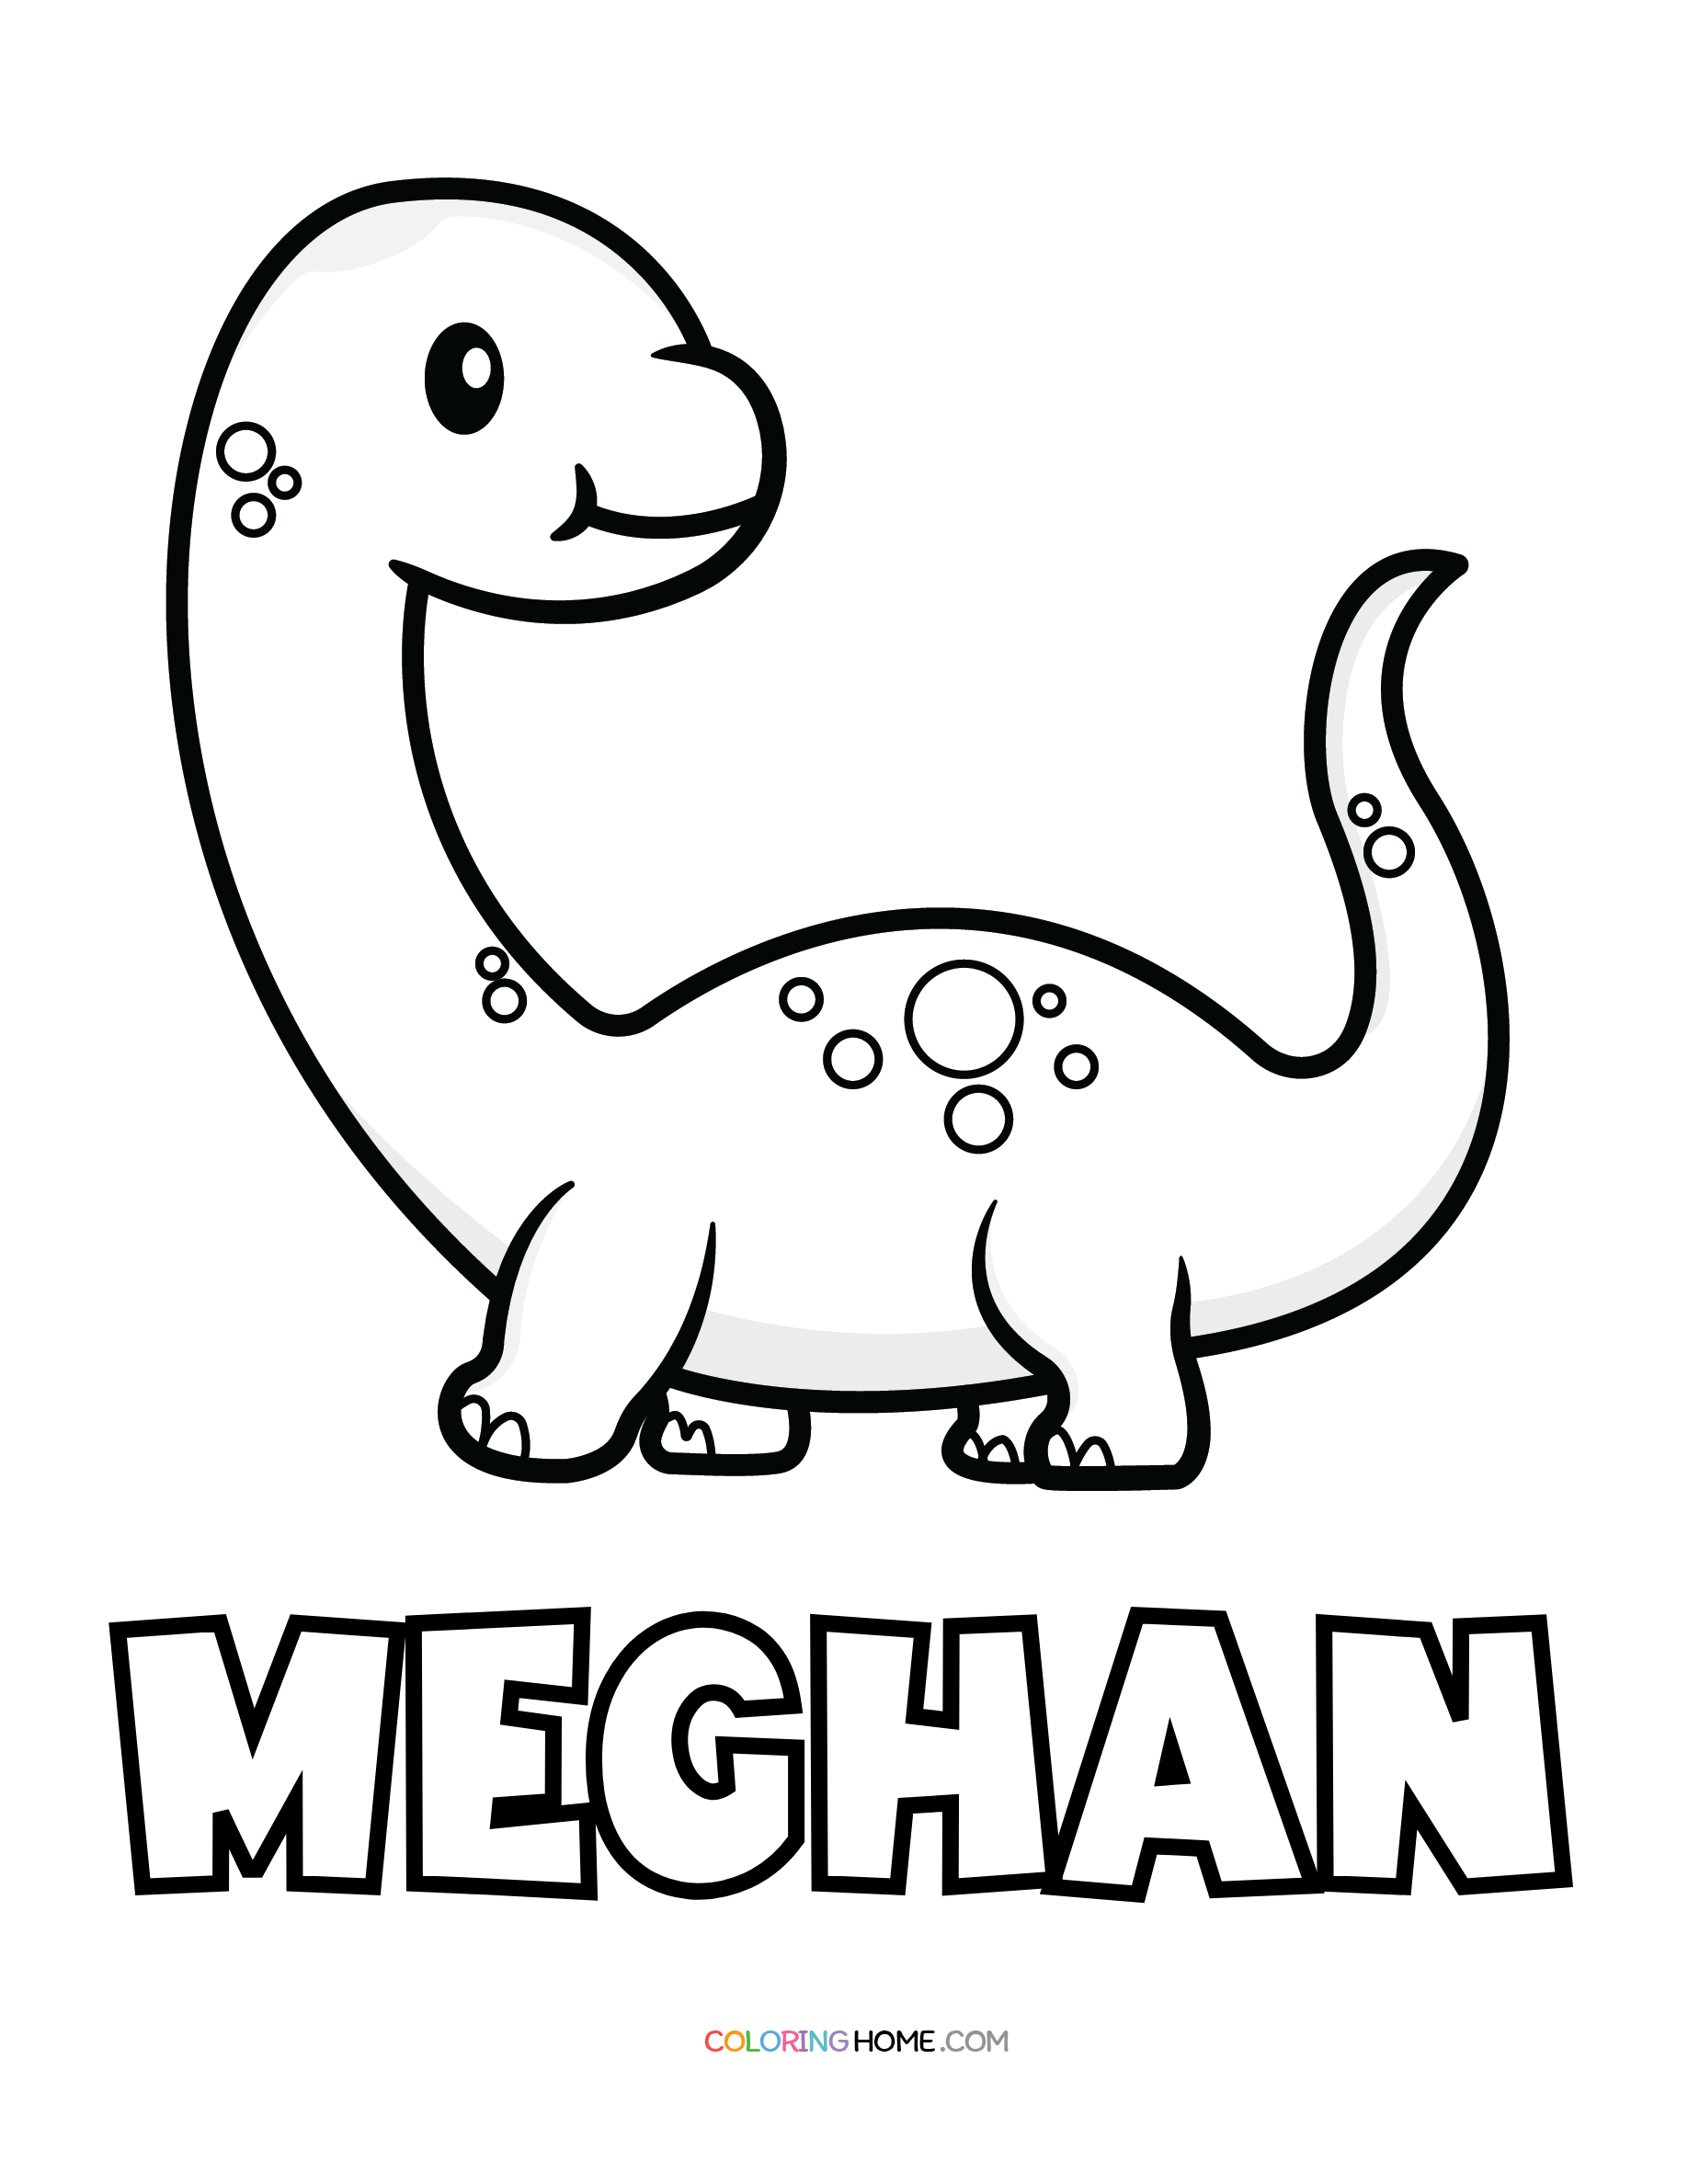 Meghan dinosaur coloring page